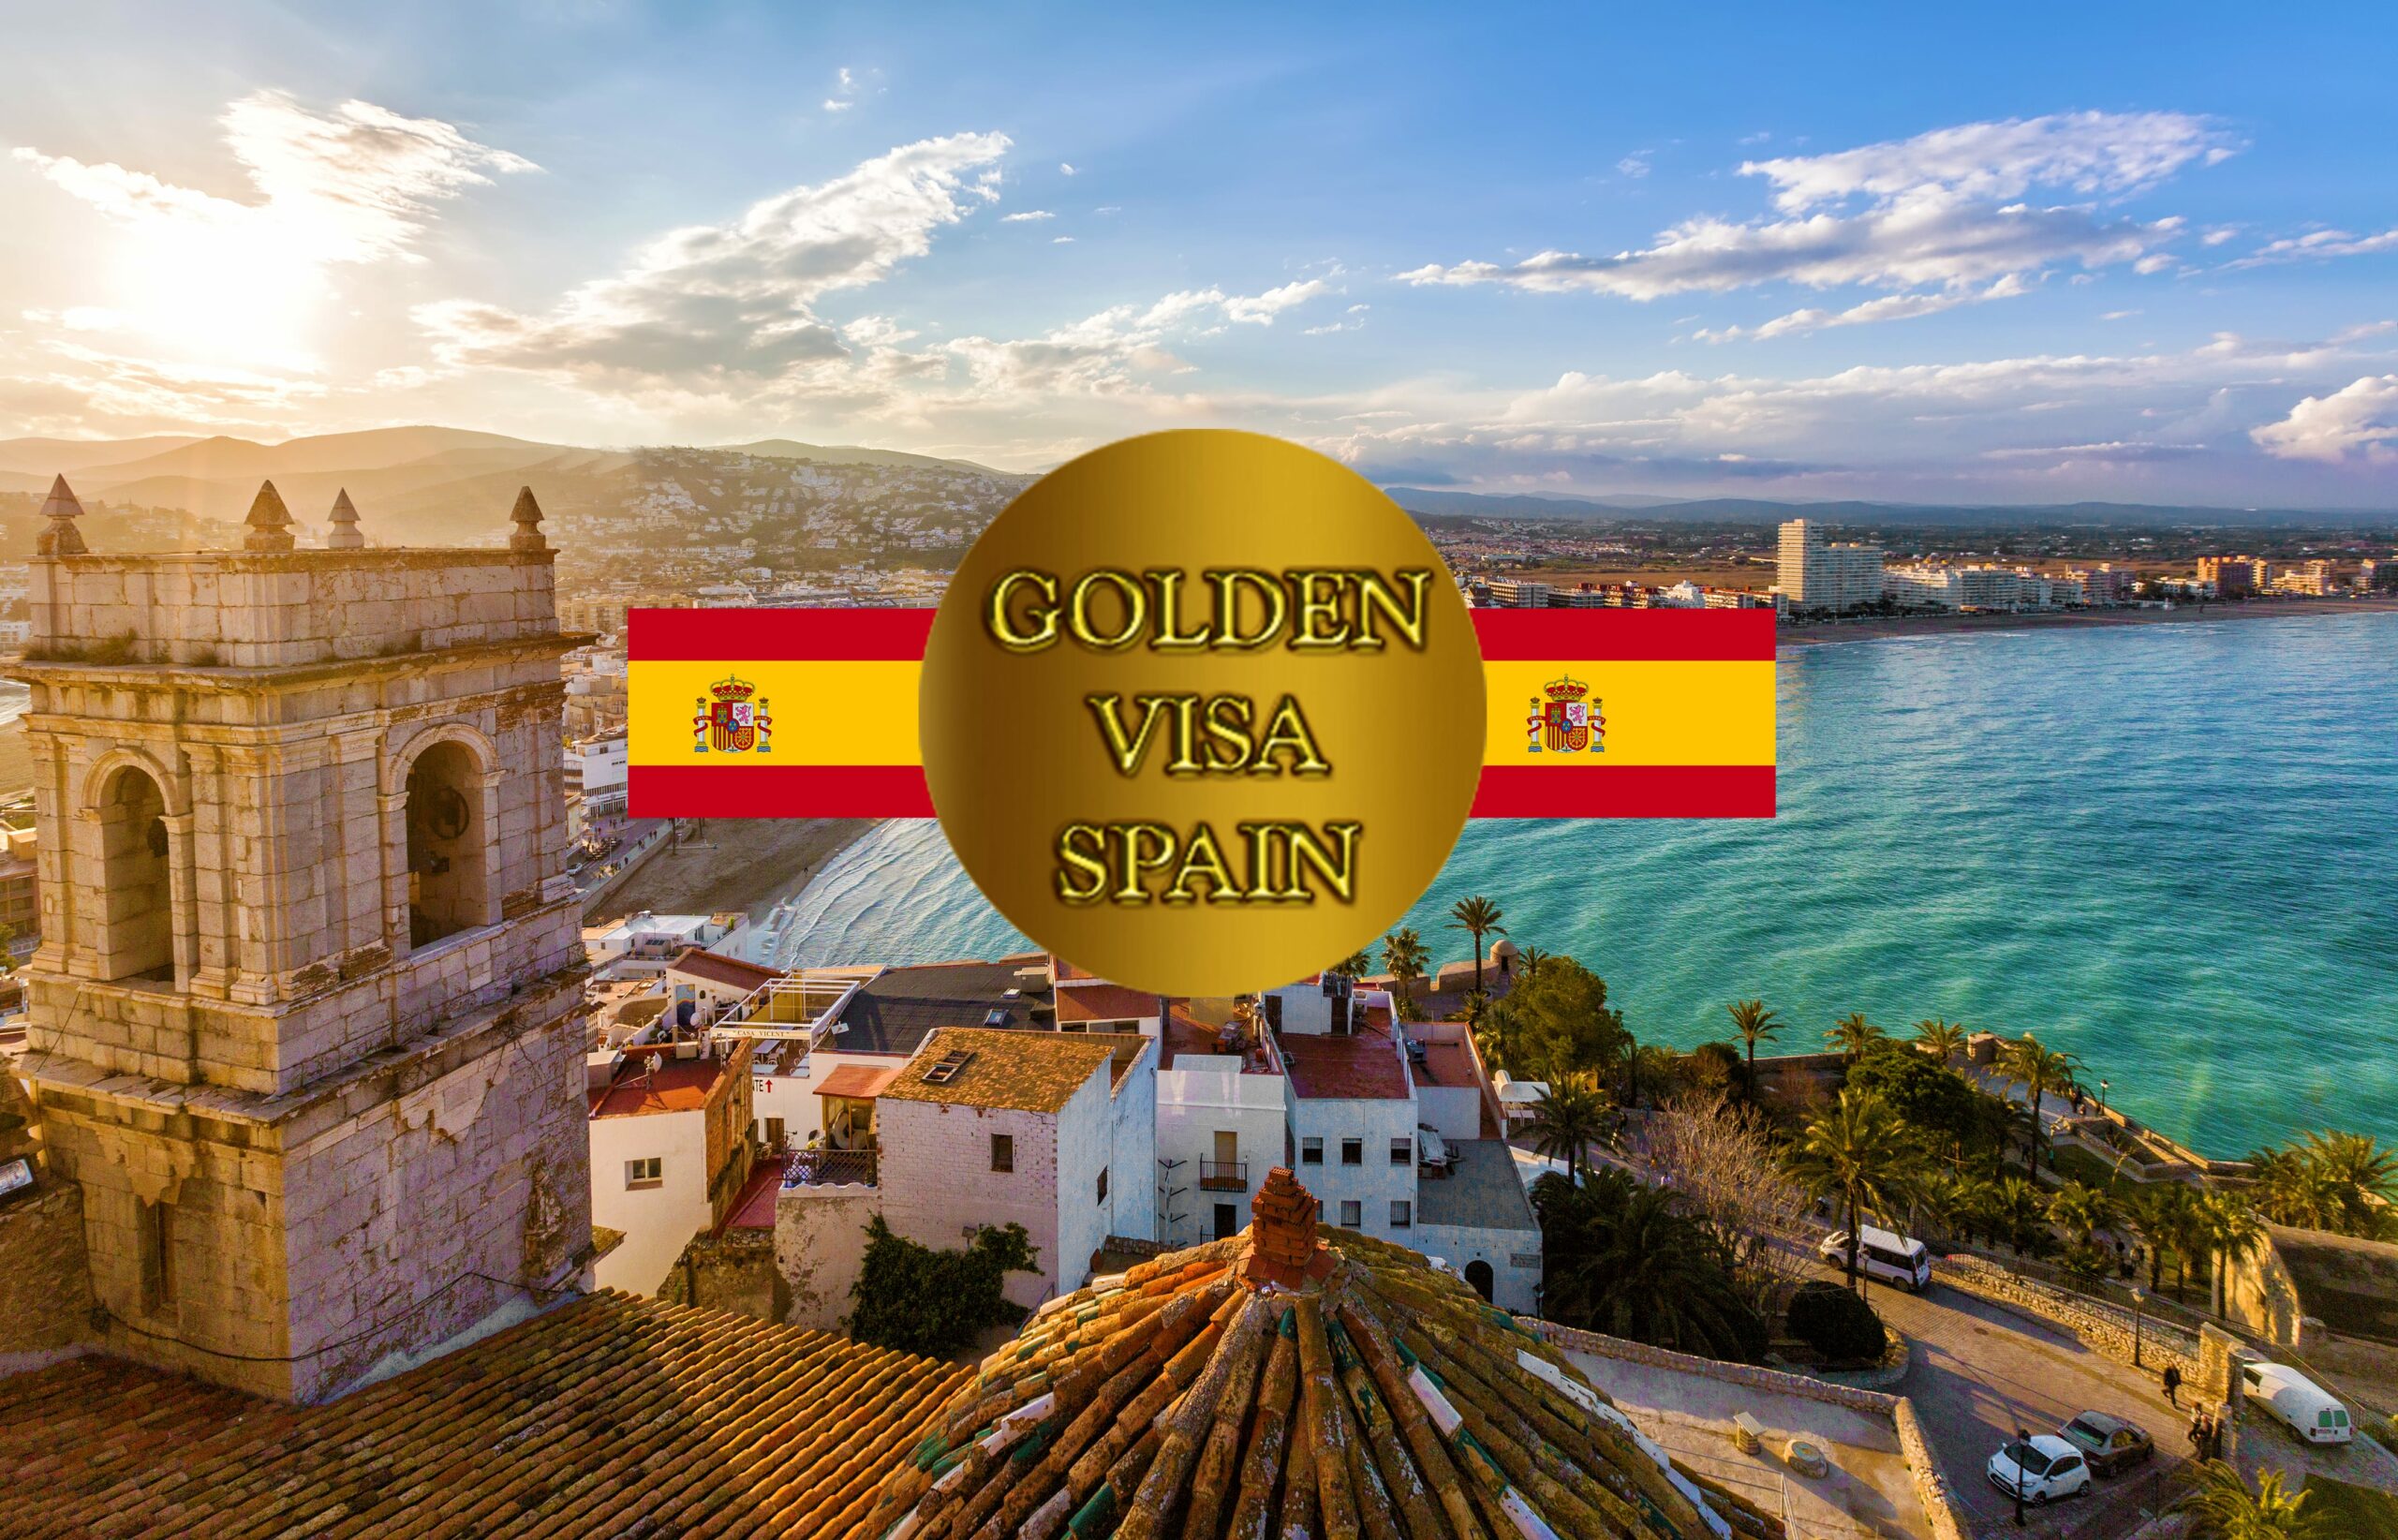 The end of Spain's Golden Visa